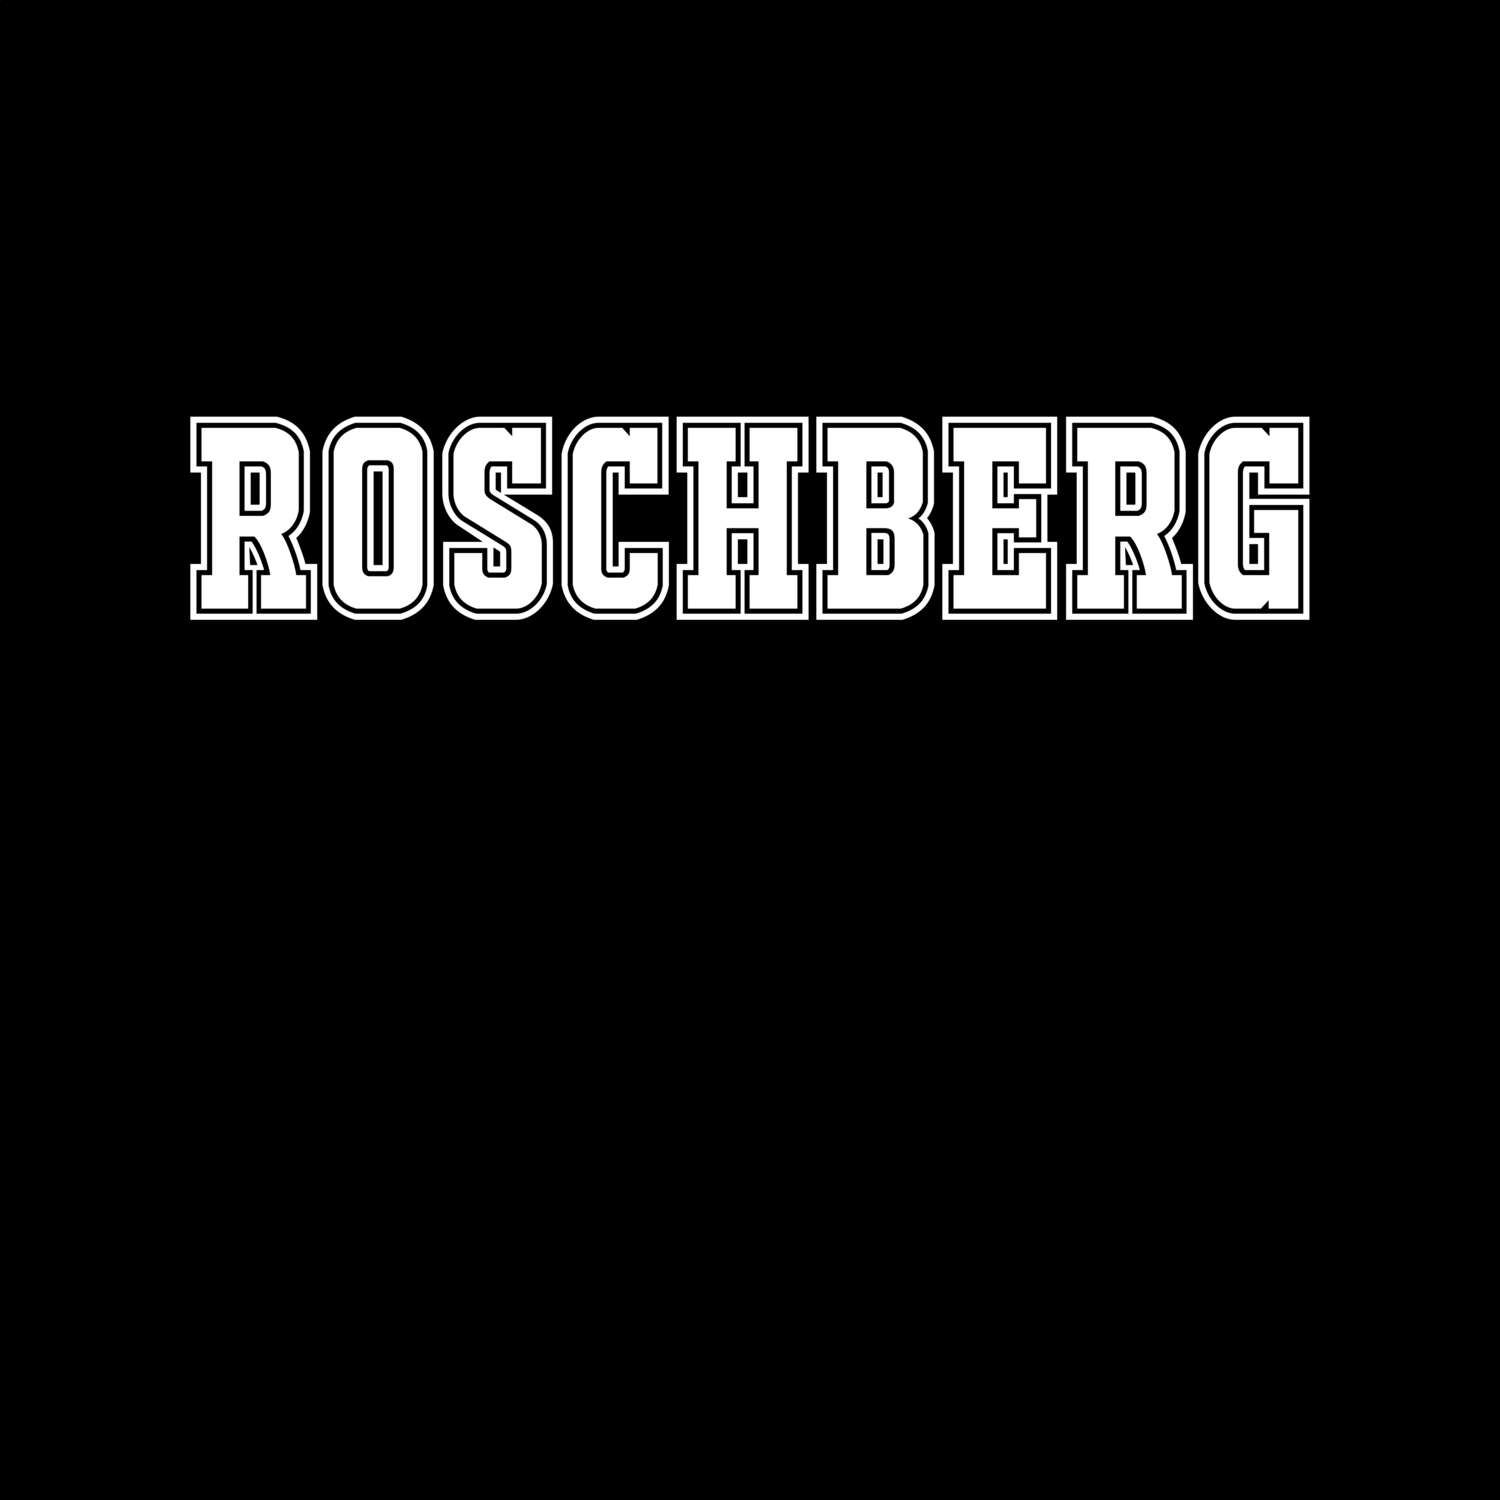 Roschberg T-Shirt »Classic«